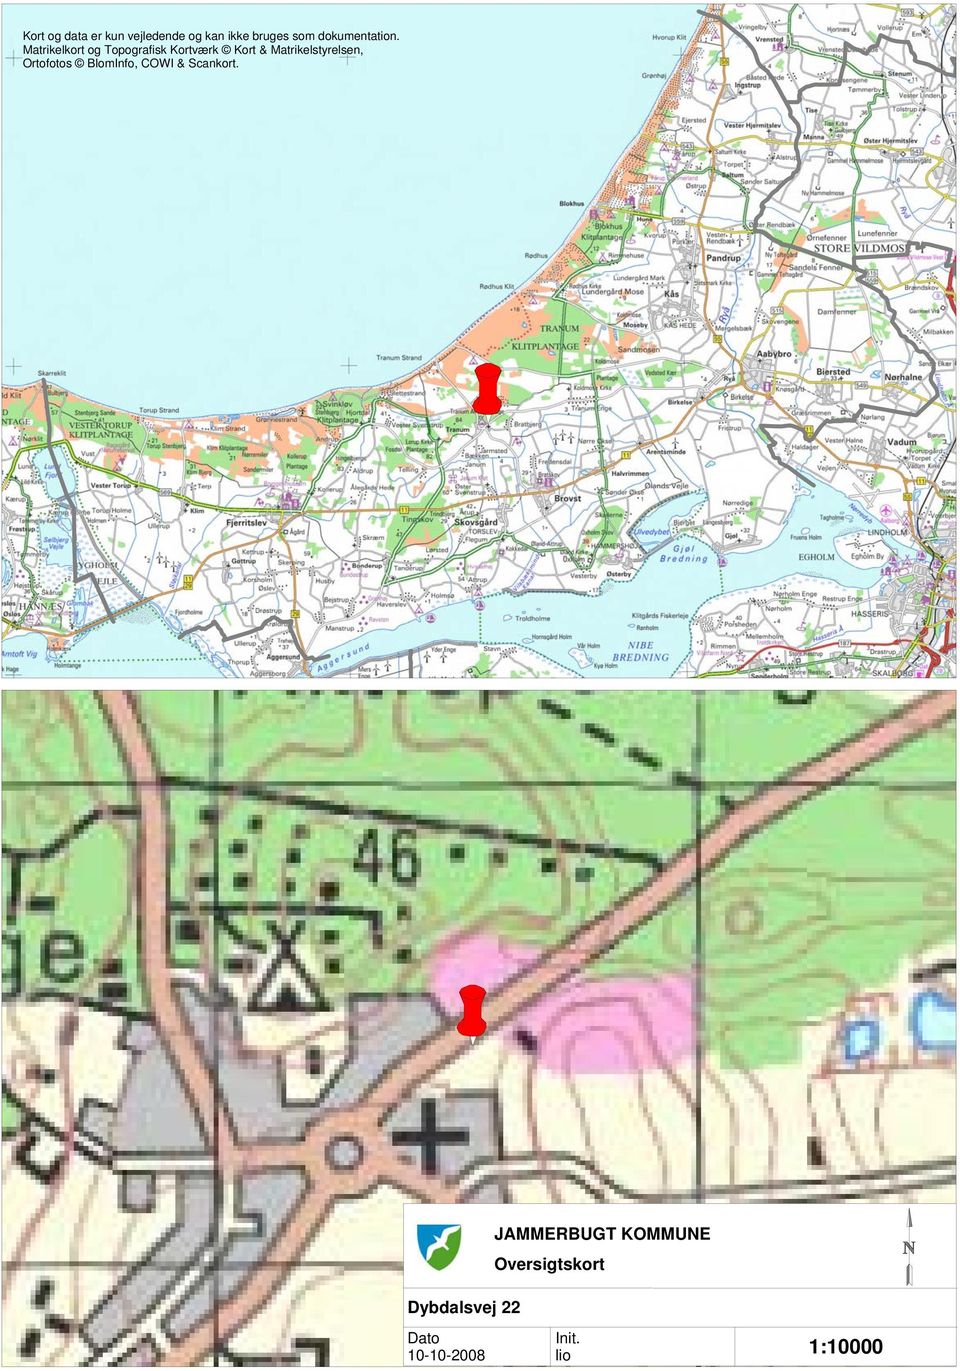 Matrikelkort og Topografisk Kortværk Kort & Matrikelstyrelsen,